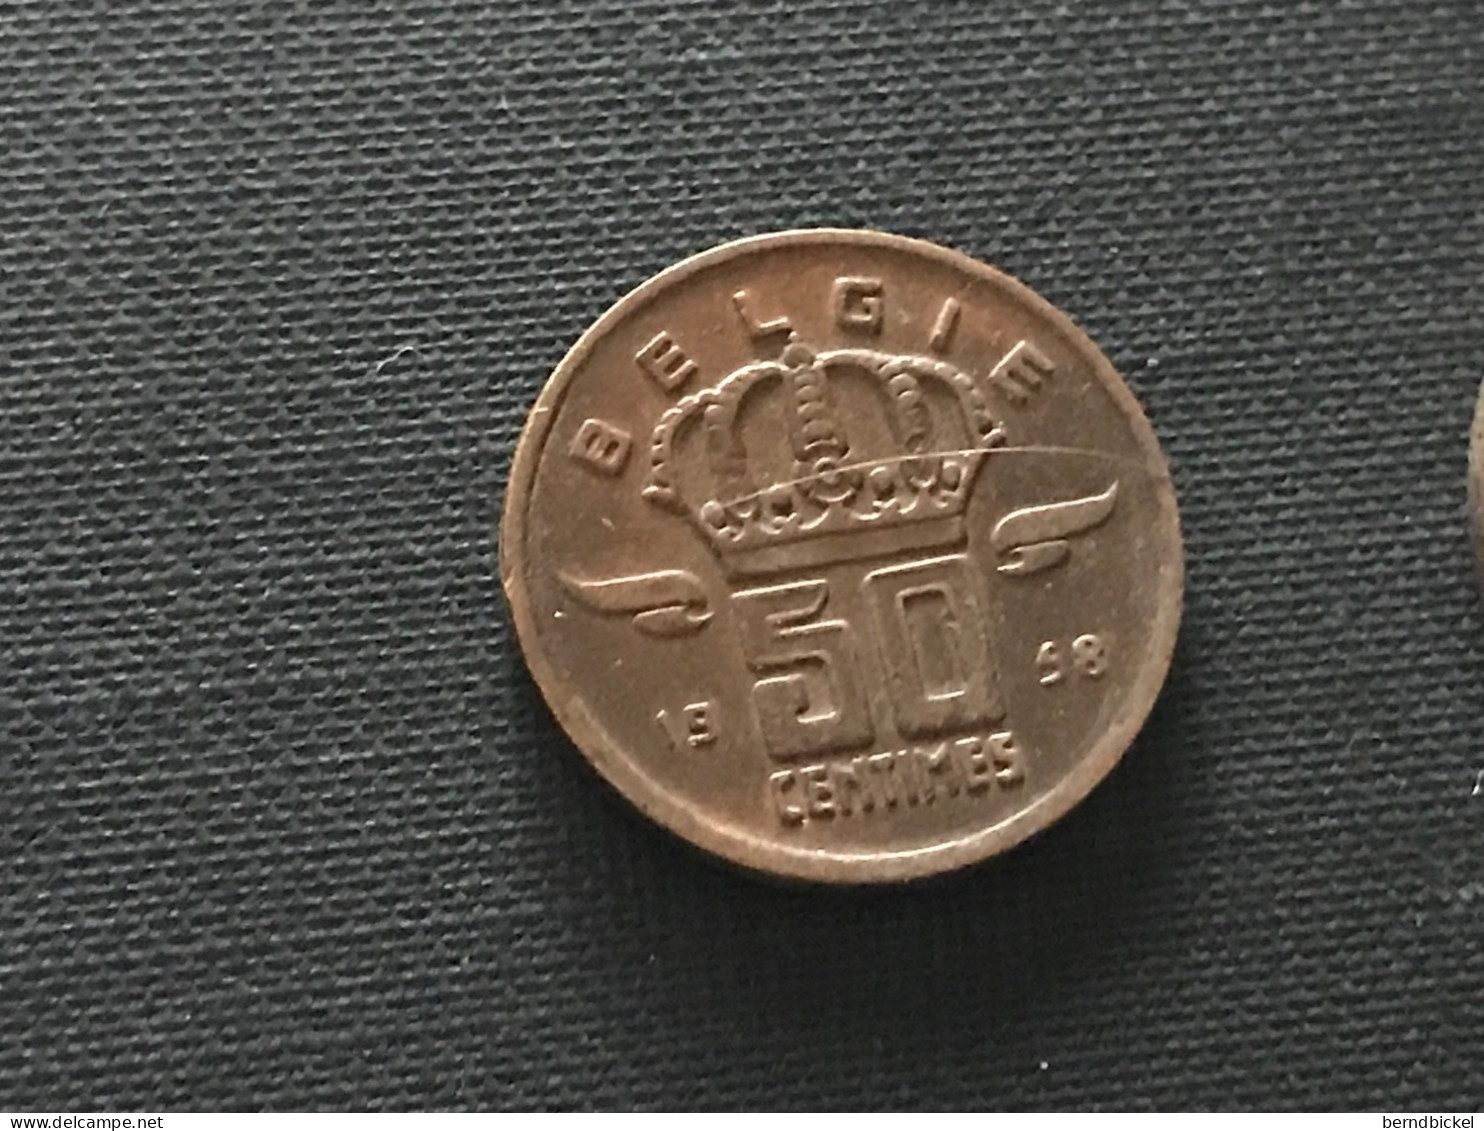 Münze Münzen Umlaufmünze Belgien 50 Cent 1958 Belgie - 50 Centimes